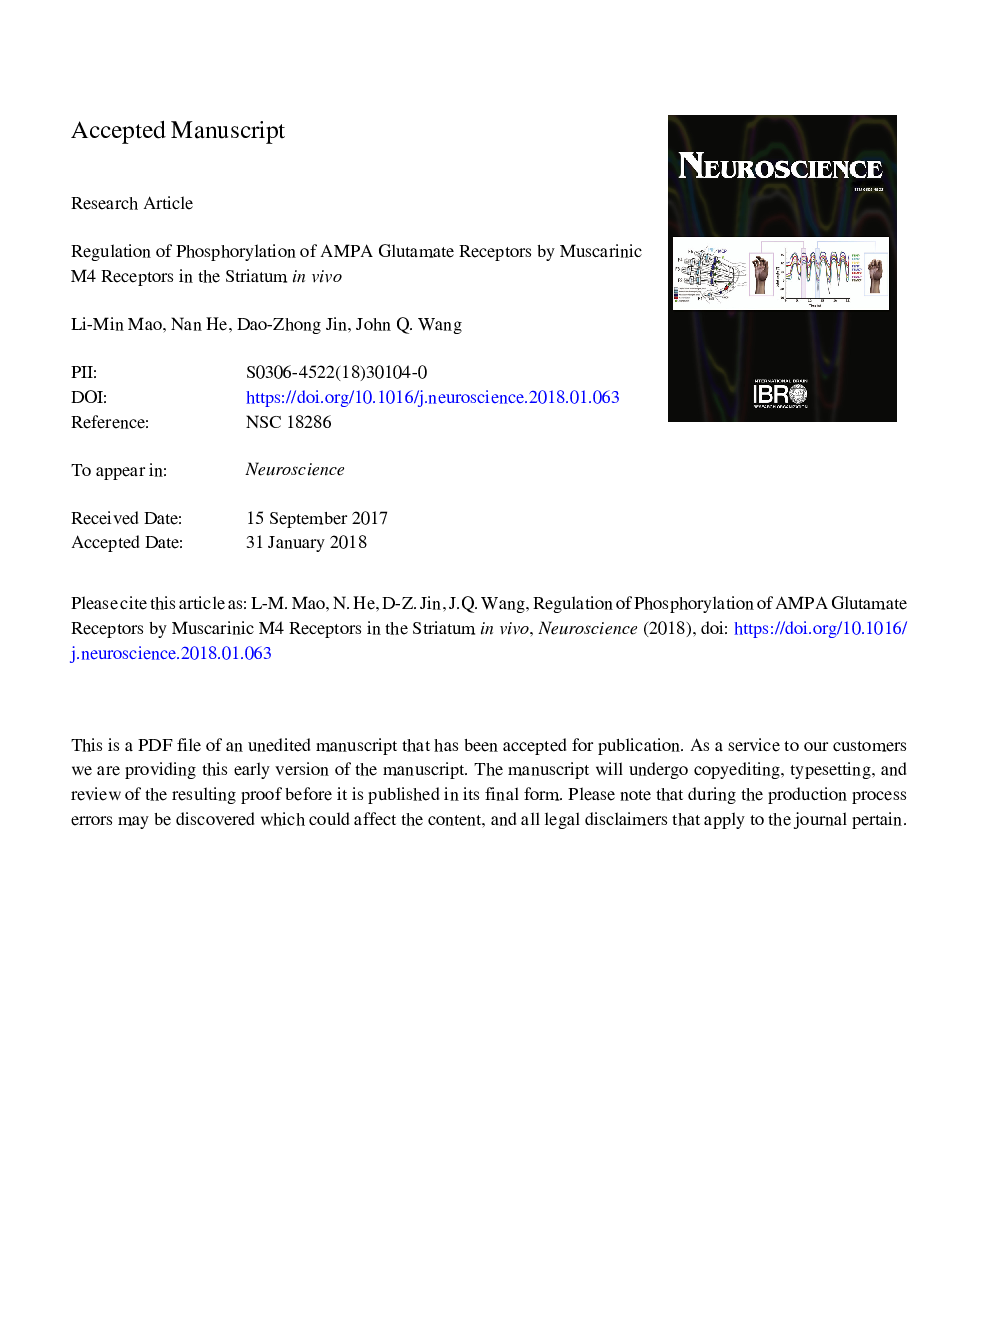 Regulation of Phosphorylation of AMPA Glutamate Receptors by Muscarinic M4 Receptors in the Striatum In vivo